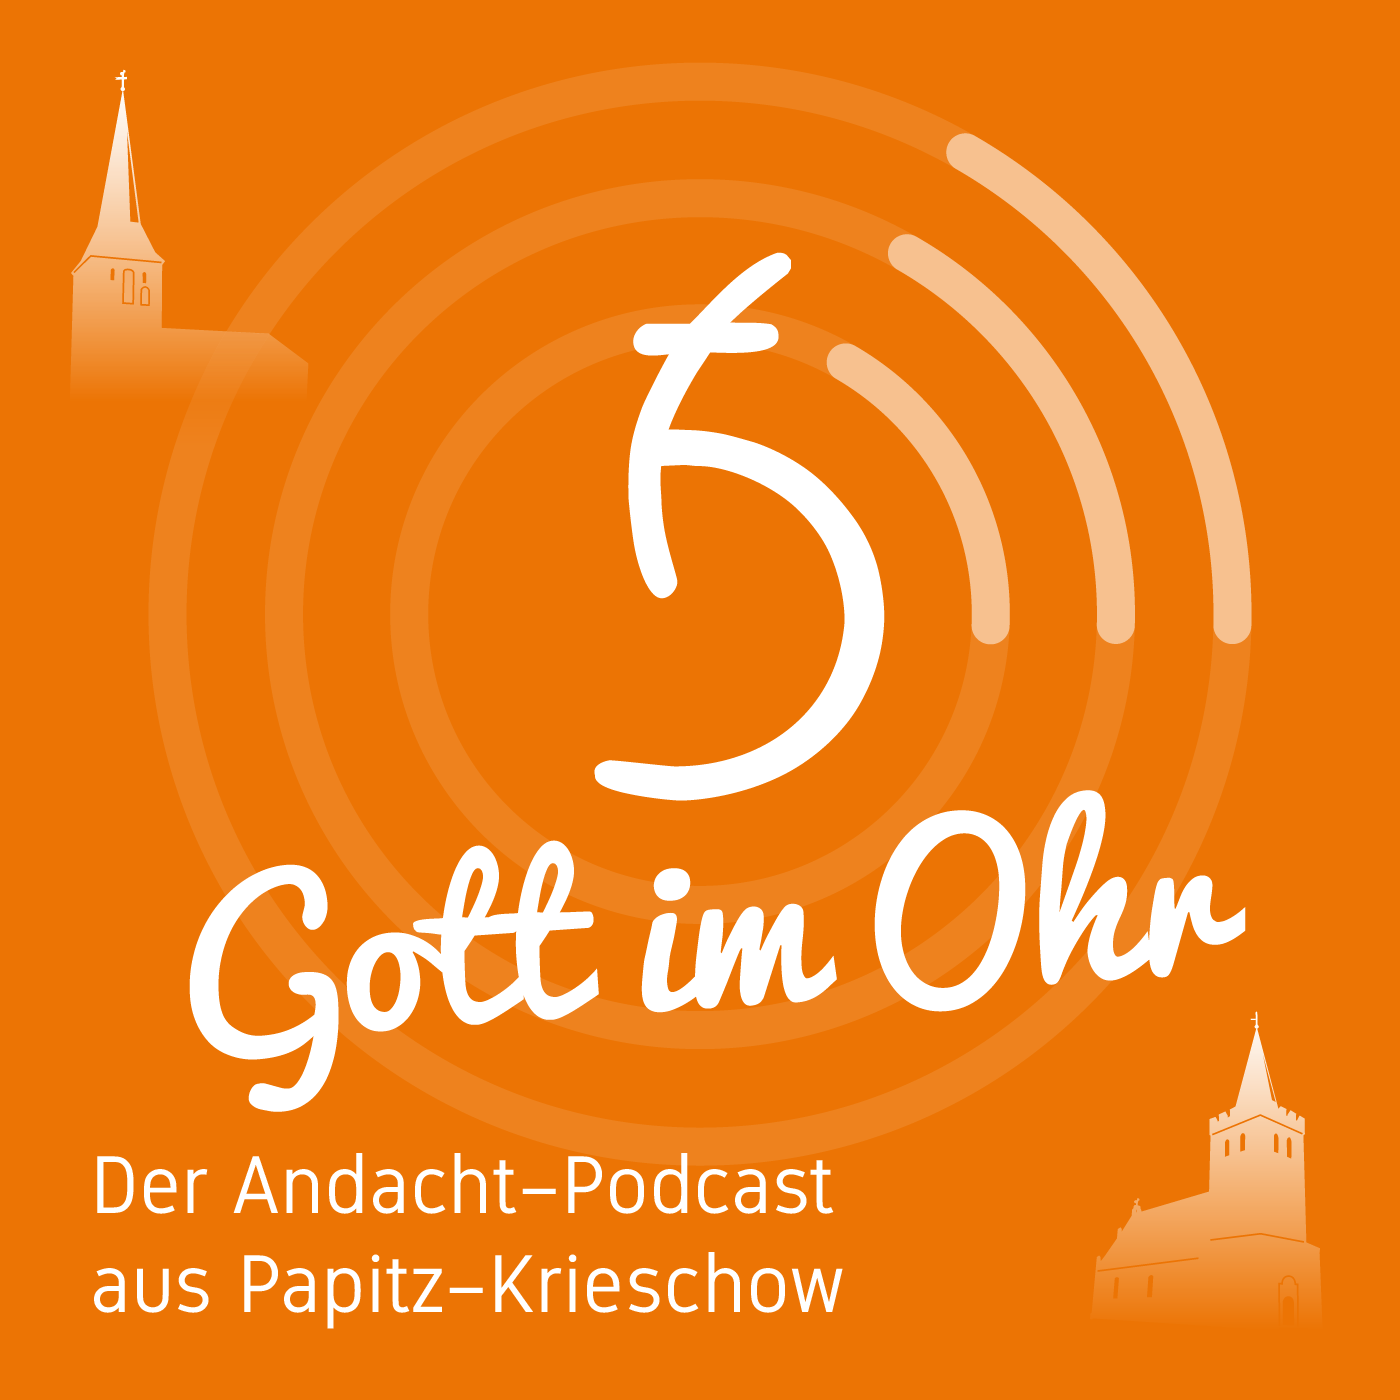 Gott im Ohr - der Andacht-Podcast aus Papitz-Krieschow (Logo)